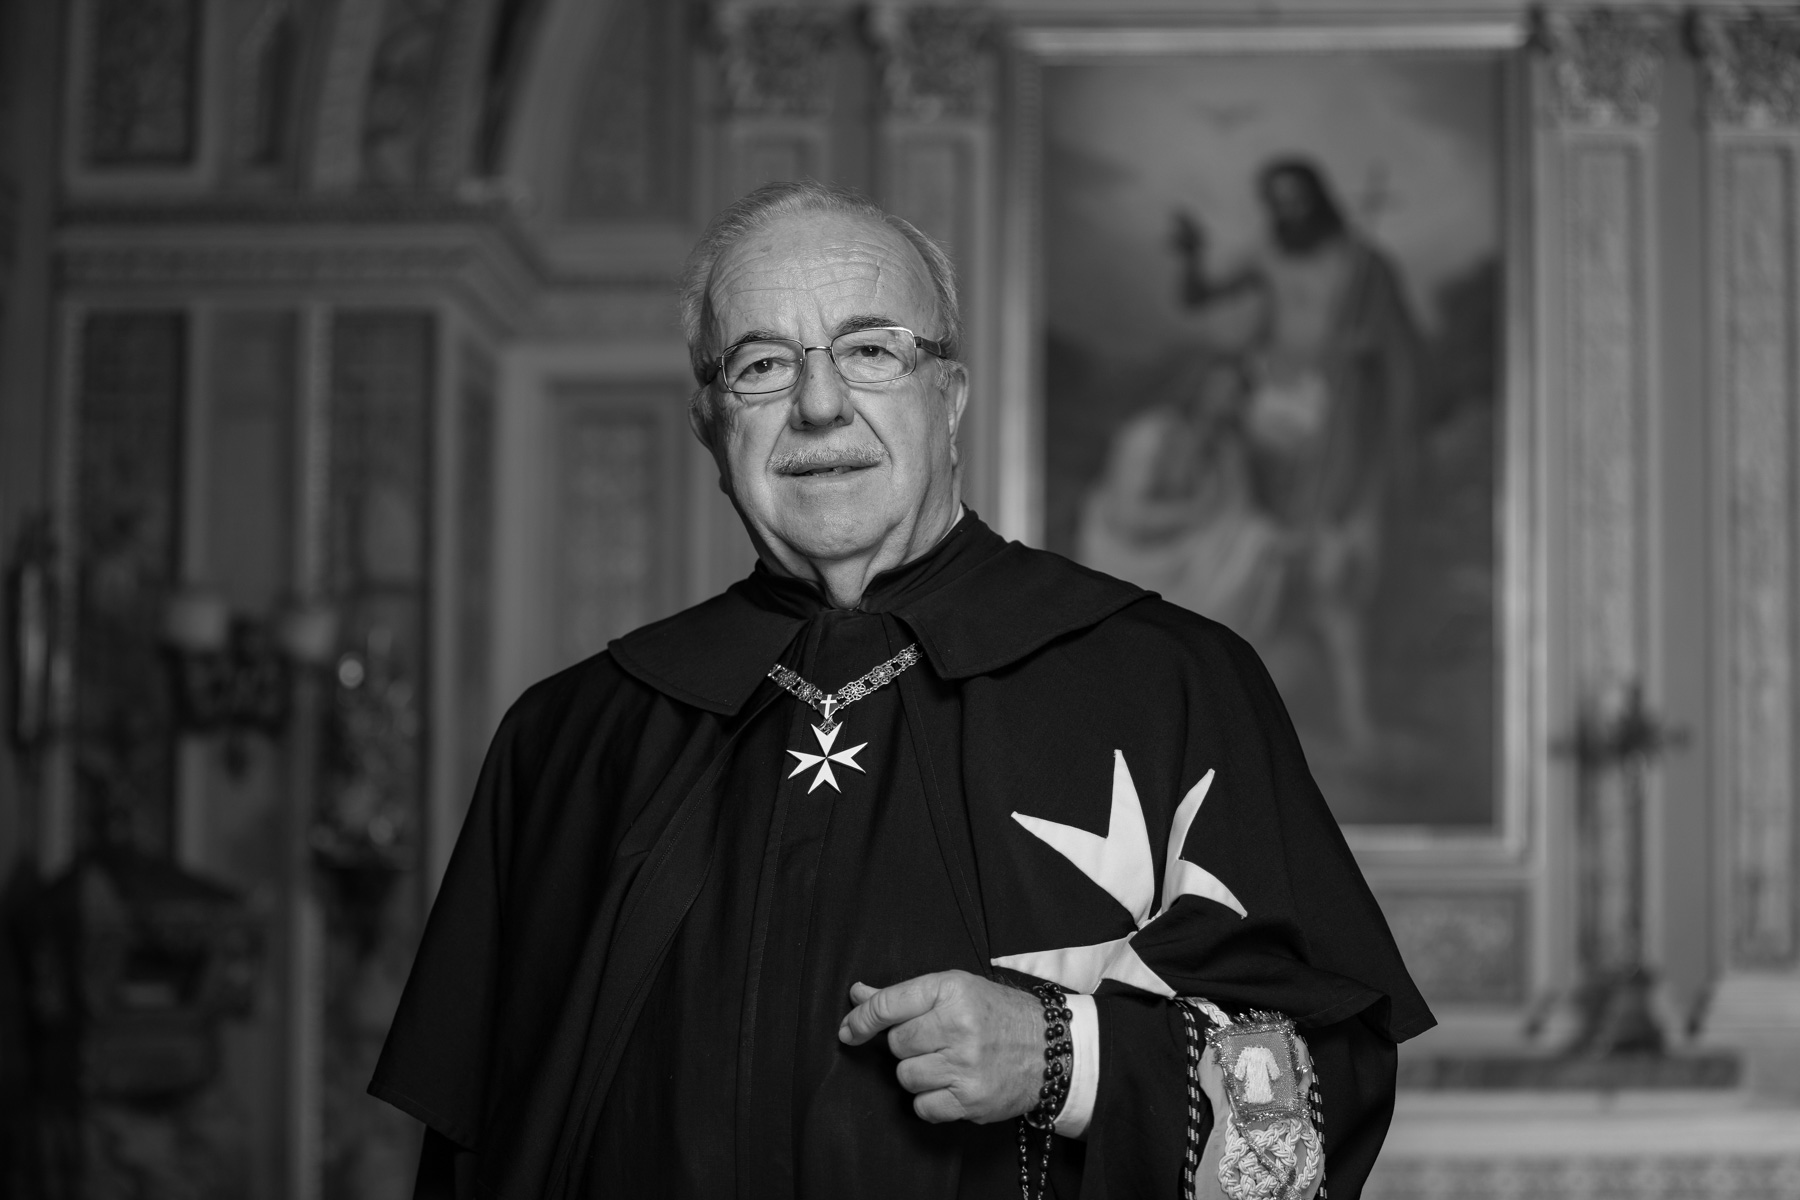 Grand Magistry announces the passing of H.E. Lieutenant of the Grand Master, Fra’ Marco Luzzago